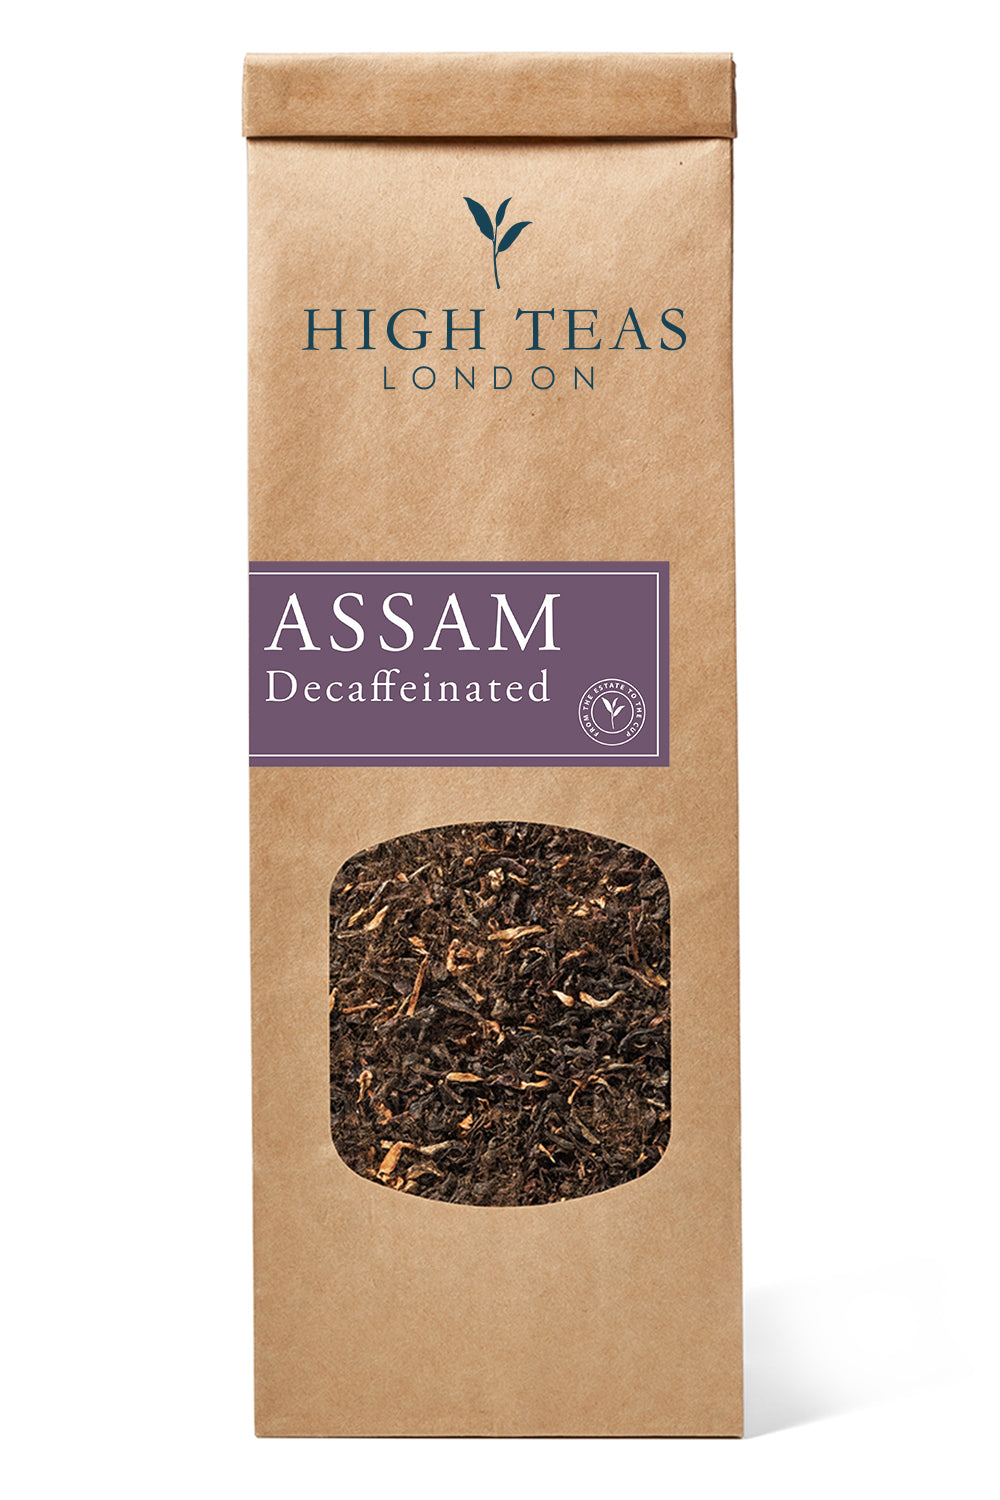 Assam Decaffeinated-50g-Loose Leaf Tea-High Teas